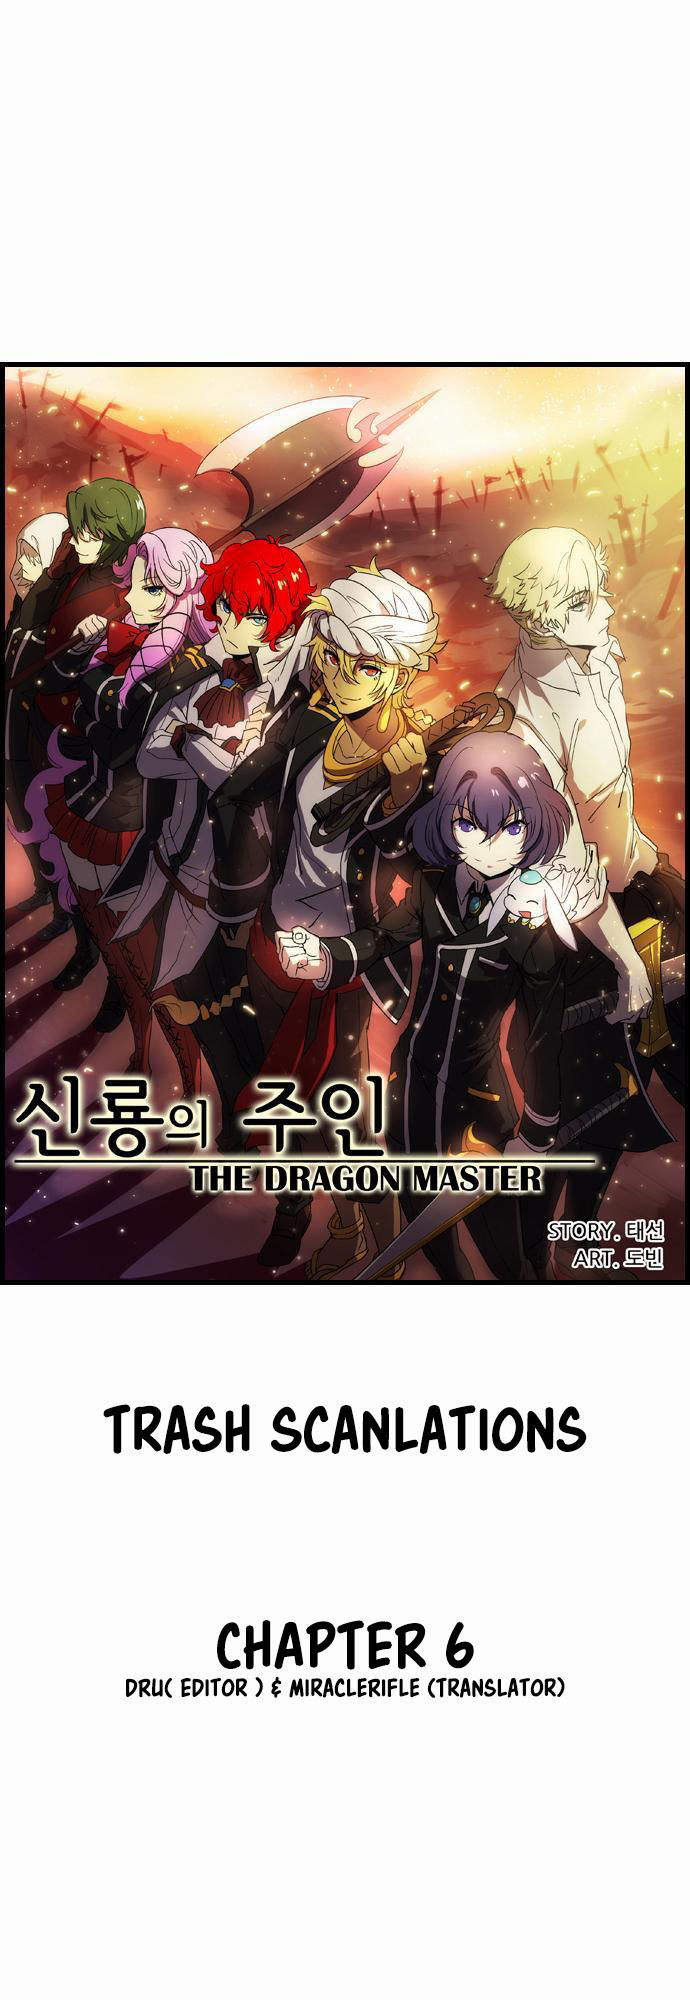 The Dragon Master 6